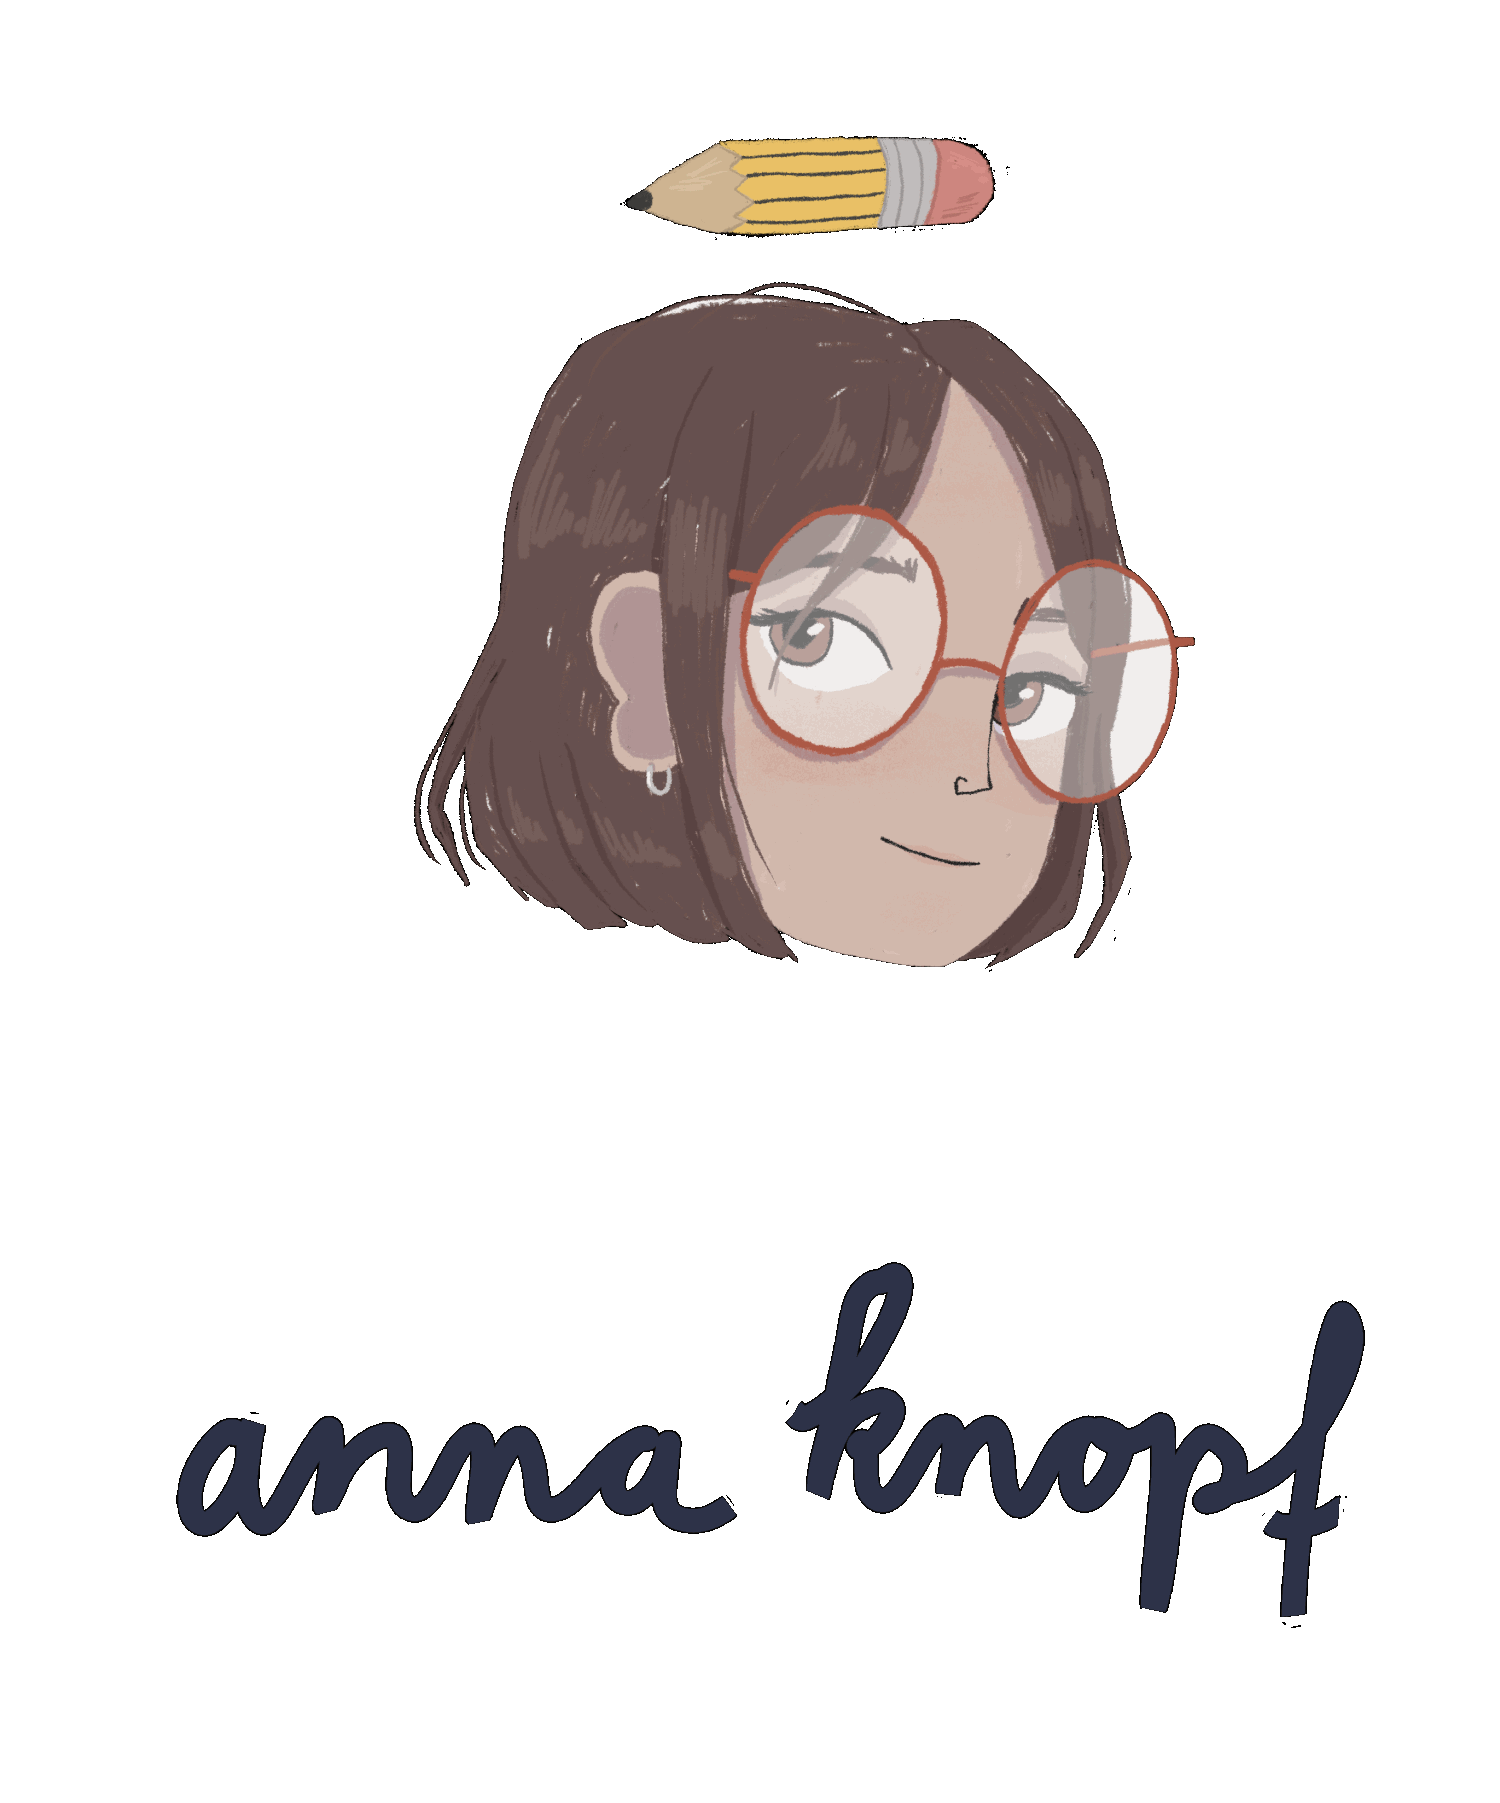 Anna Knopf